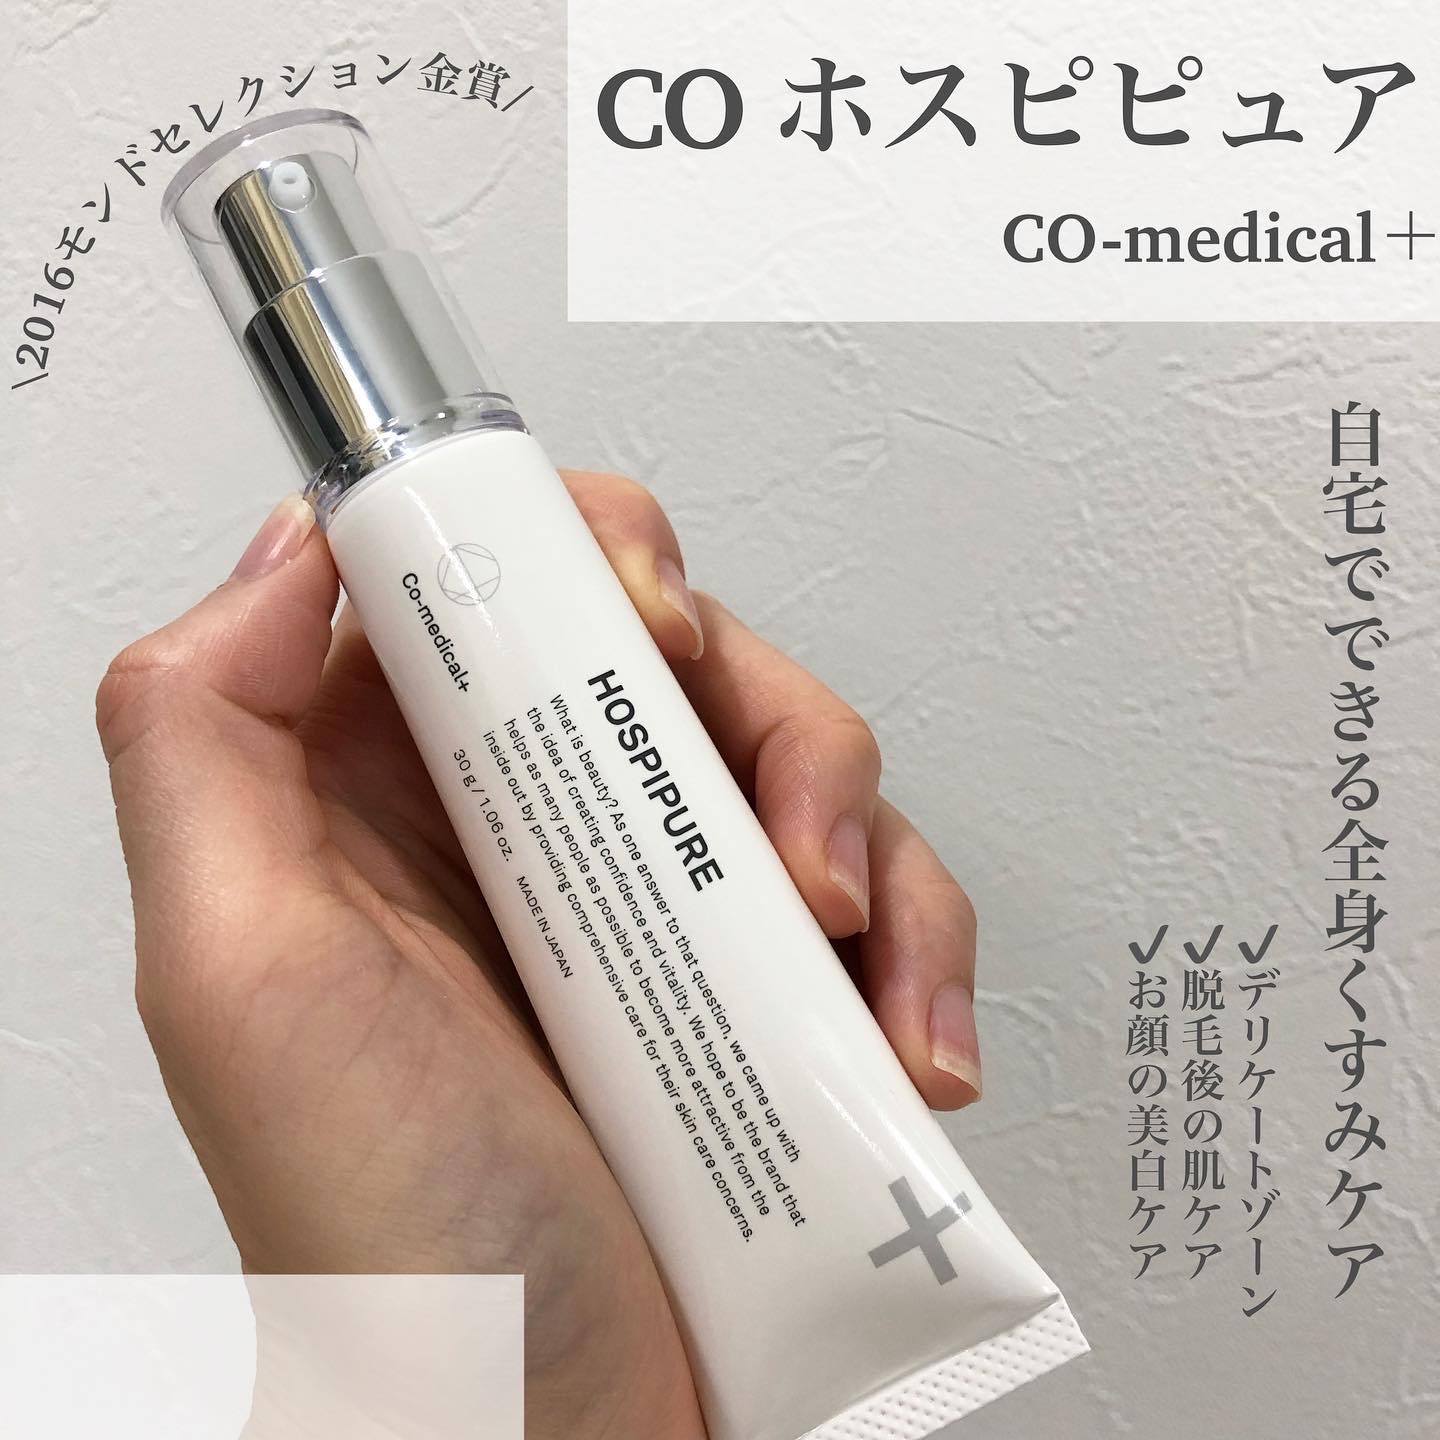 Co-medical＋ / CO ホスピピュア 30gの公式商品情報｜美容・化粧品情報